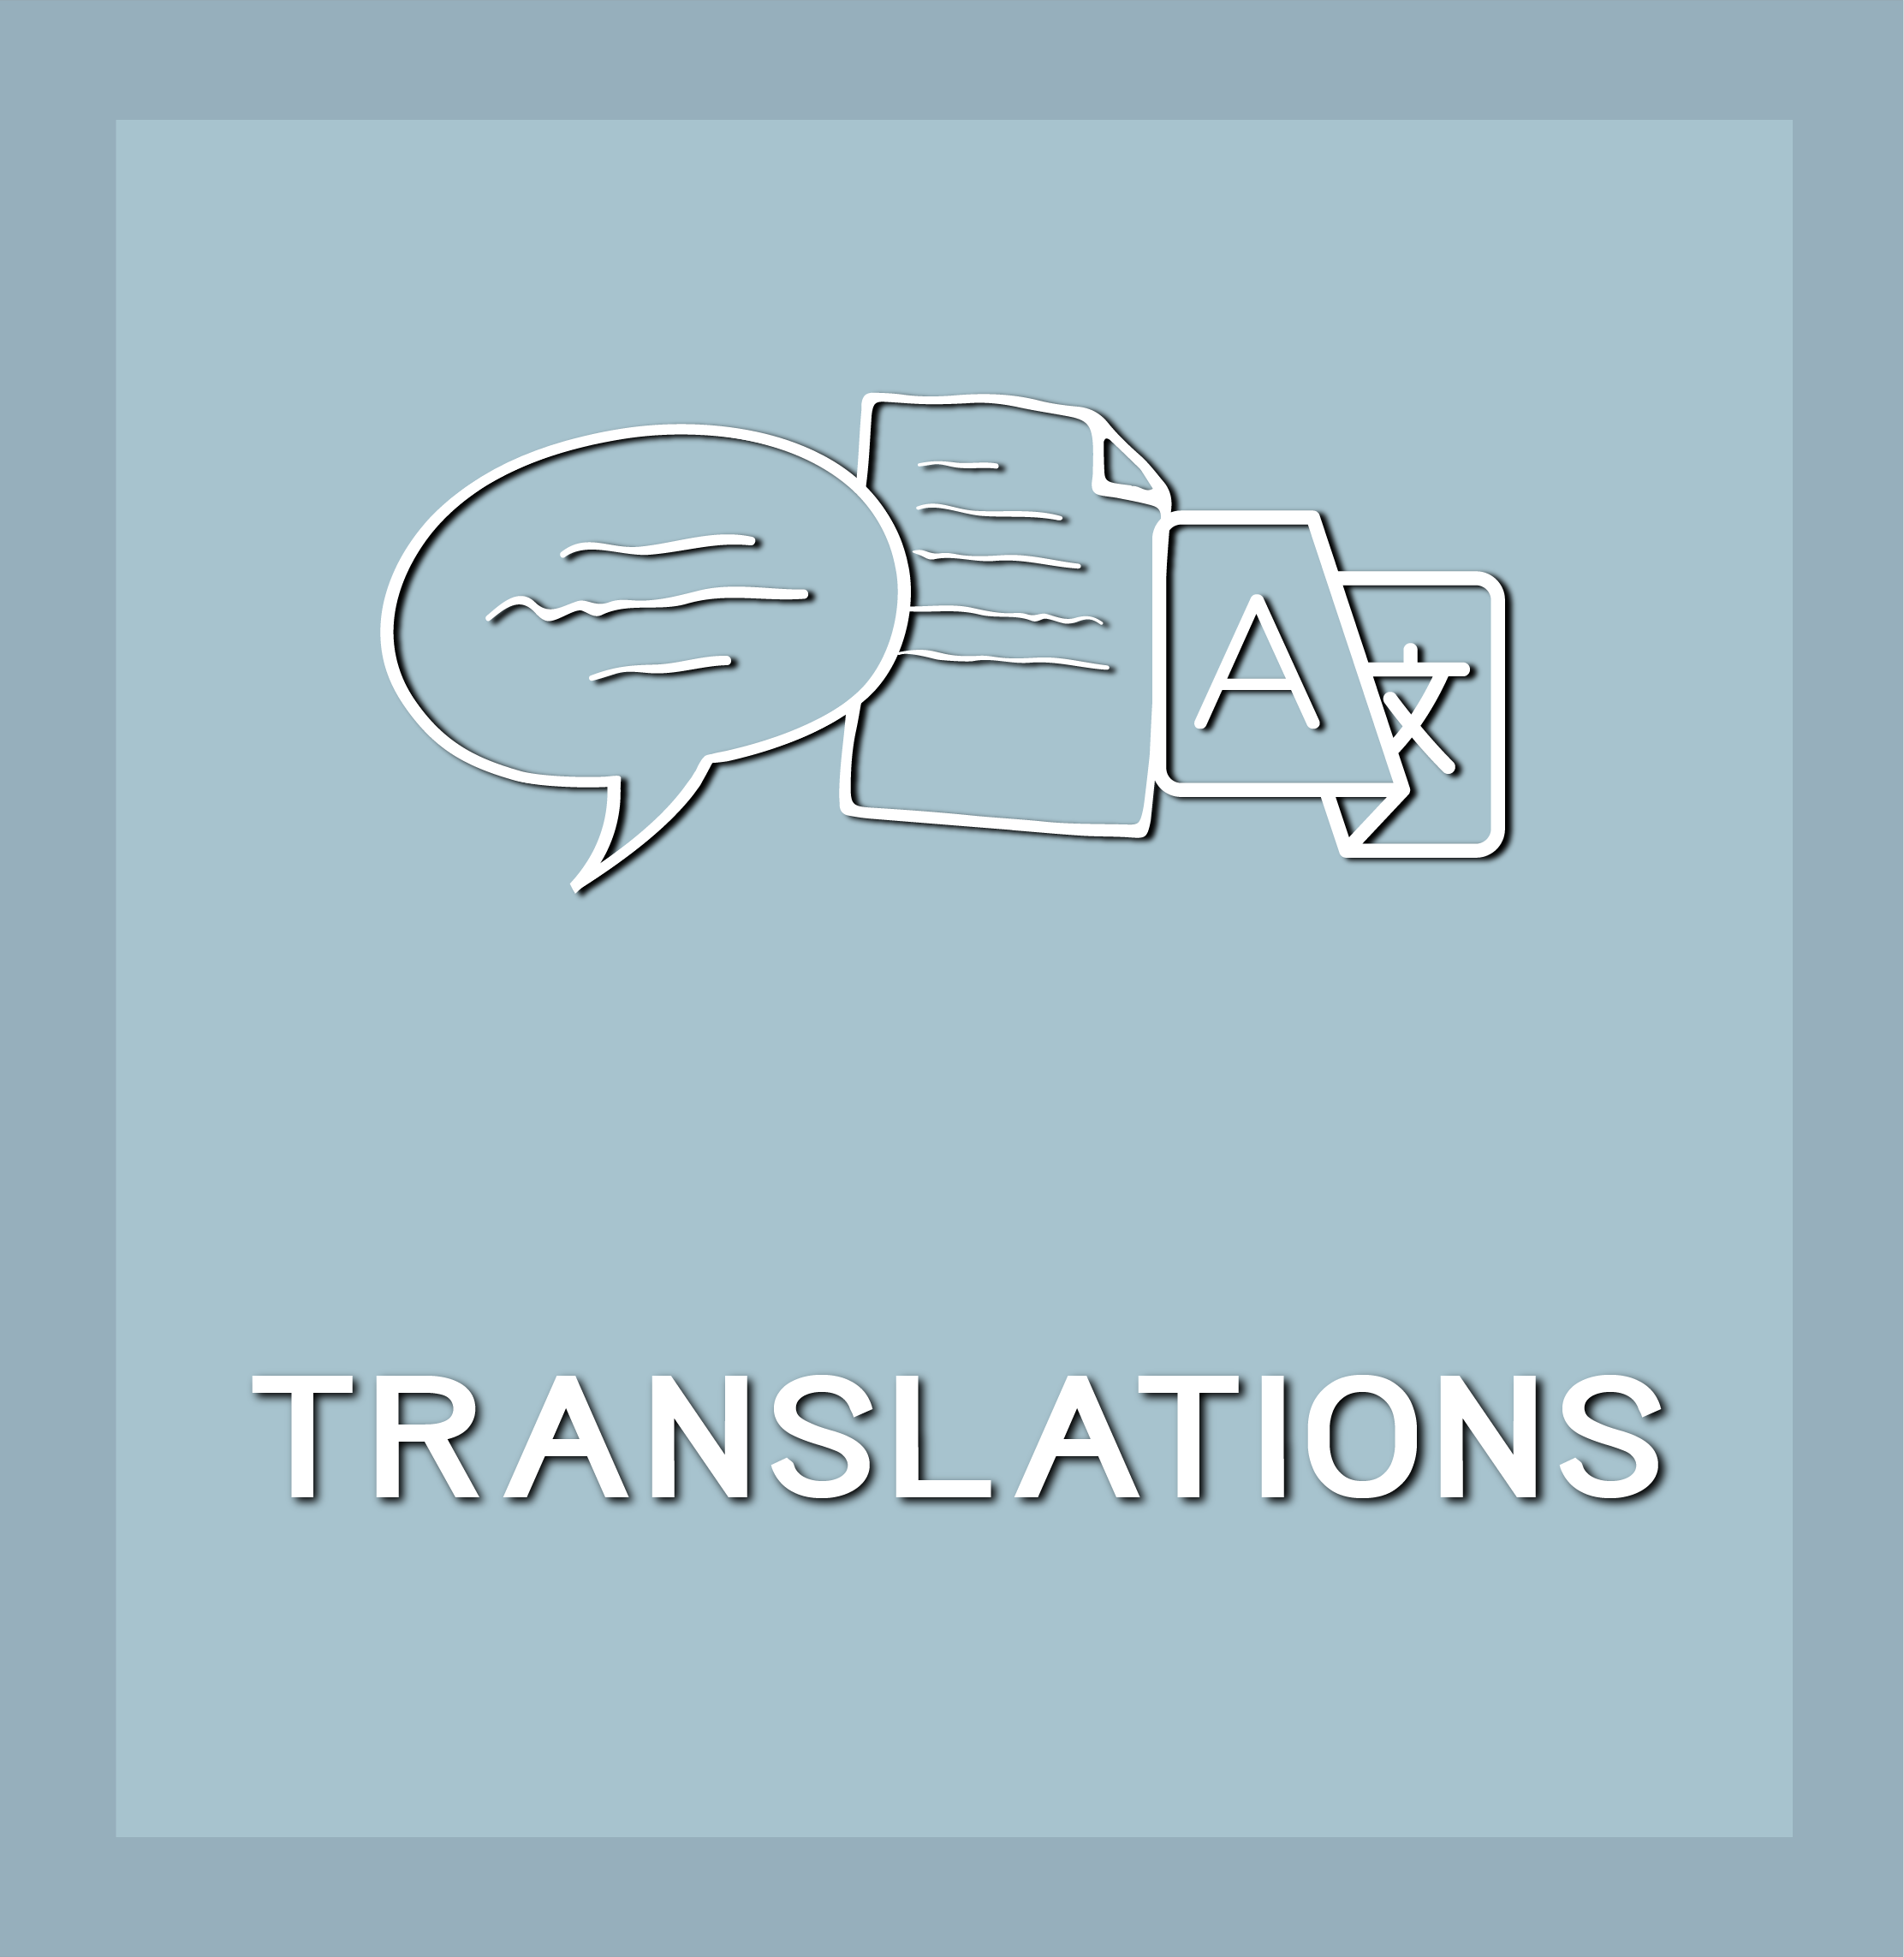 Jimi+Bernie | Translation Services + Proof-reading 